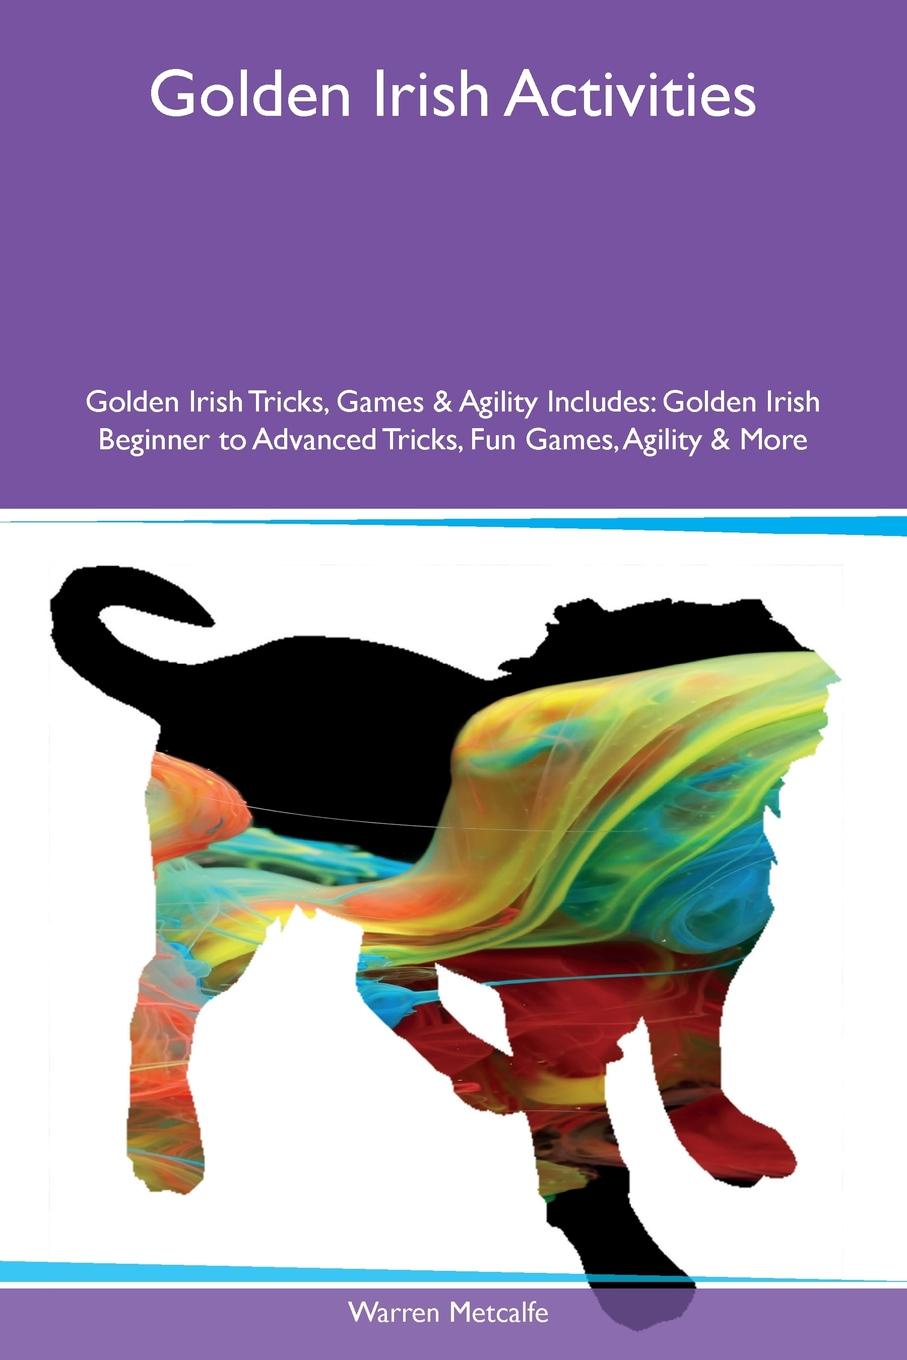 Golden Irish Activities Golden Irish Tricks, Games & Agility Includes. Golden Irish Beginner to Advanced Tricks, Fun Games, Agility & More